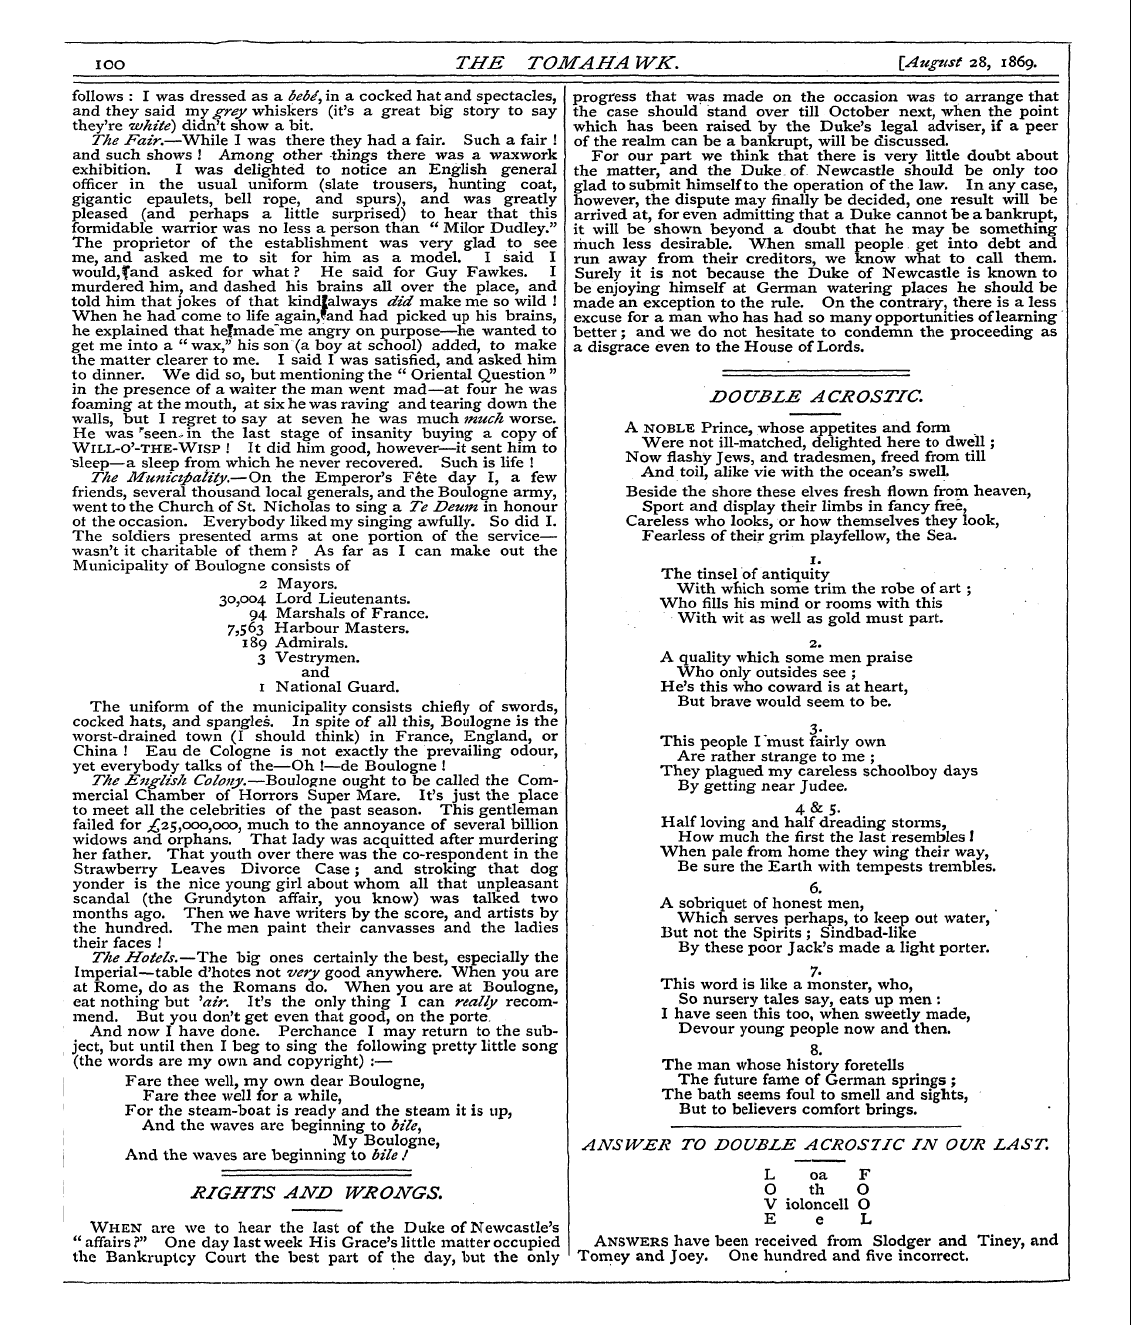 Tomahawk (1867-1870): jS F Y, 1st edition - Double Acrostic.